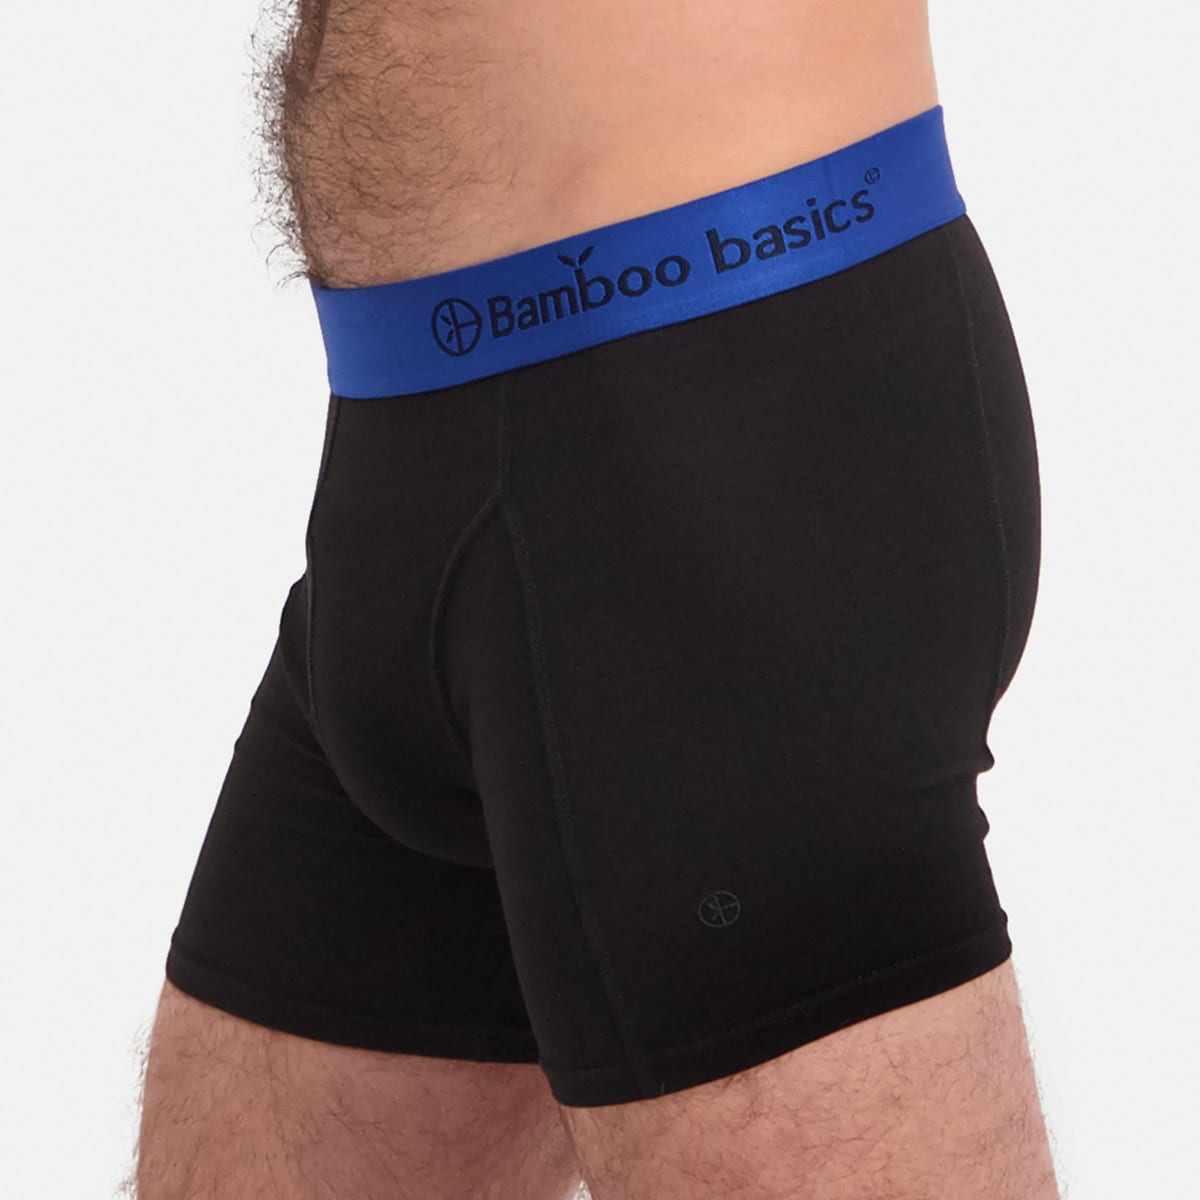 Bamboo Basics - Boxershorts Levi  - Zwart met blauw